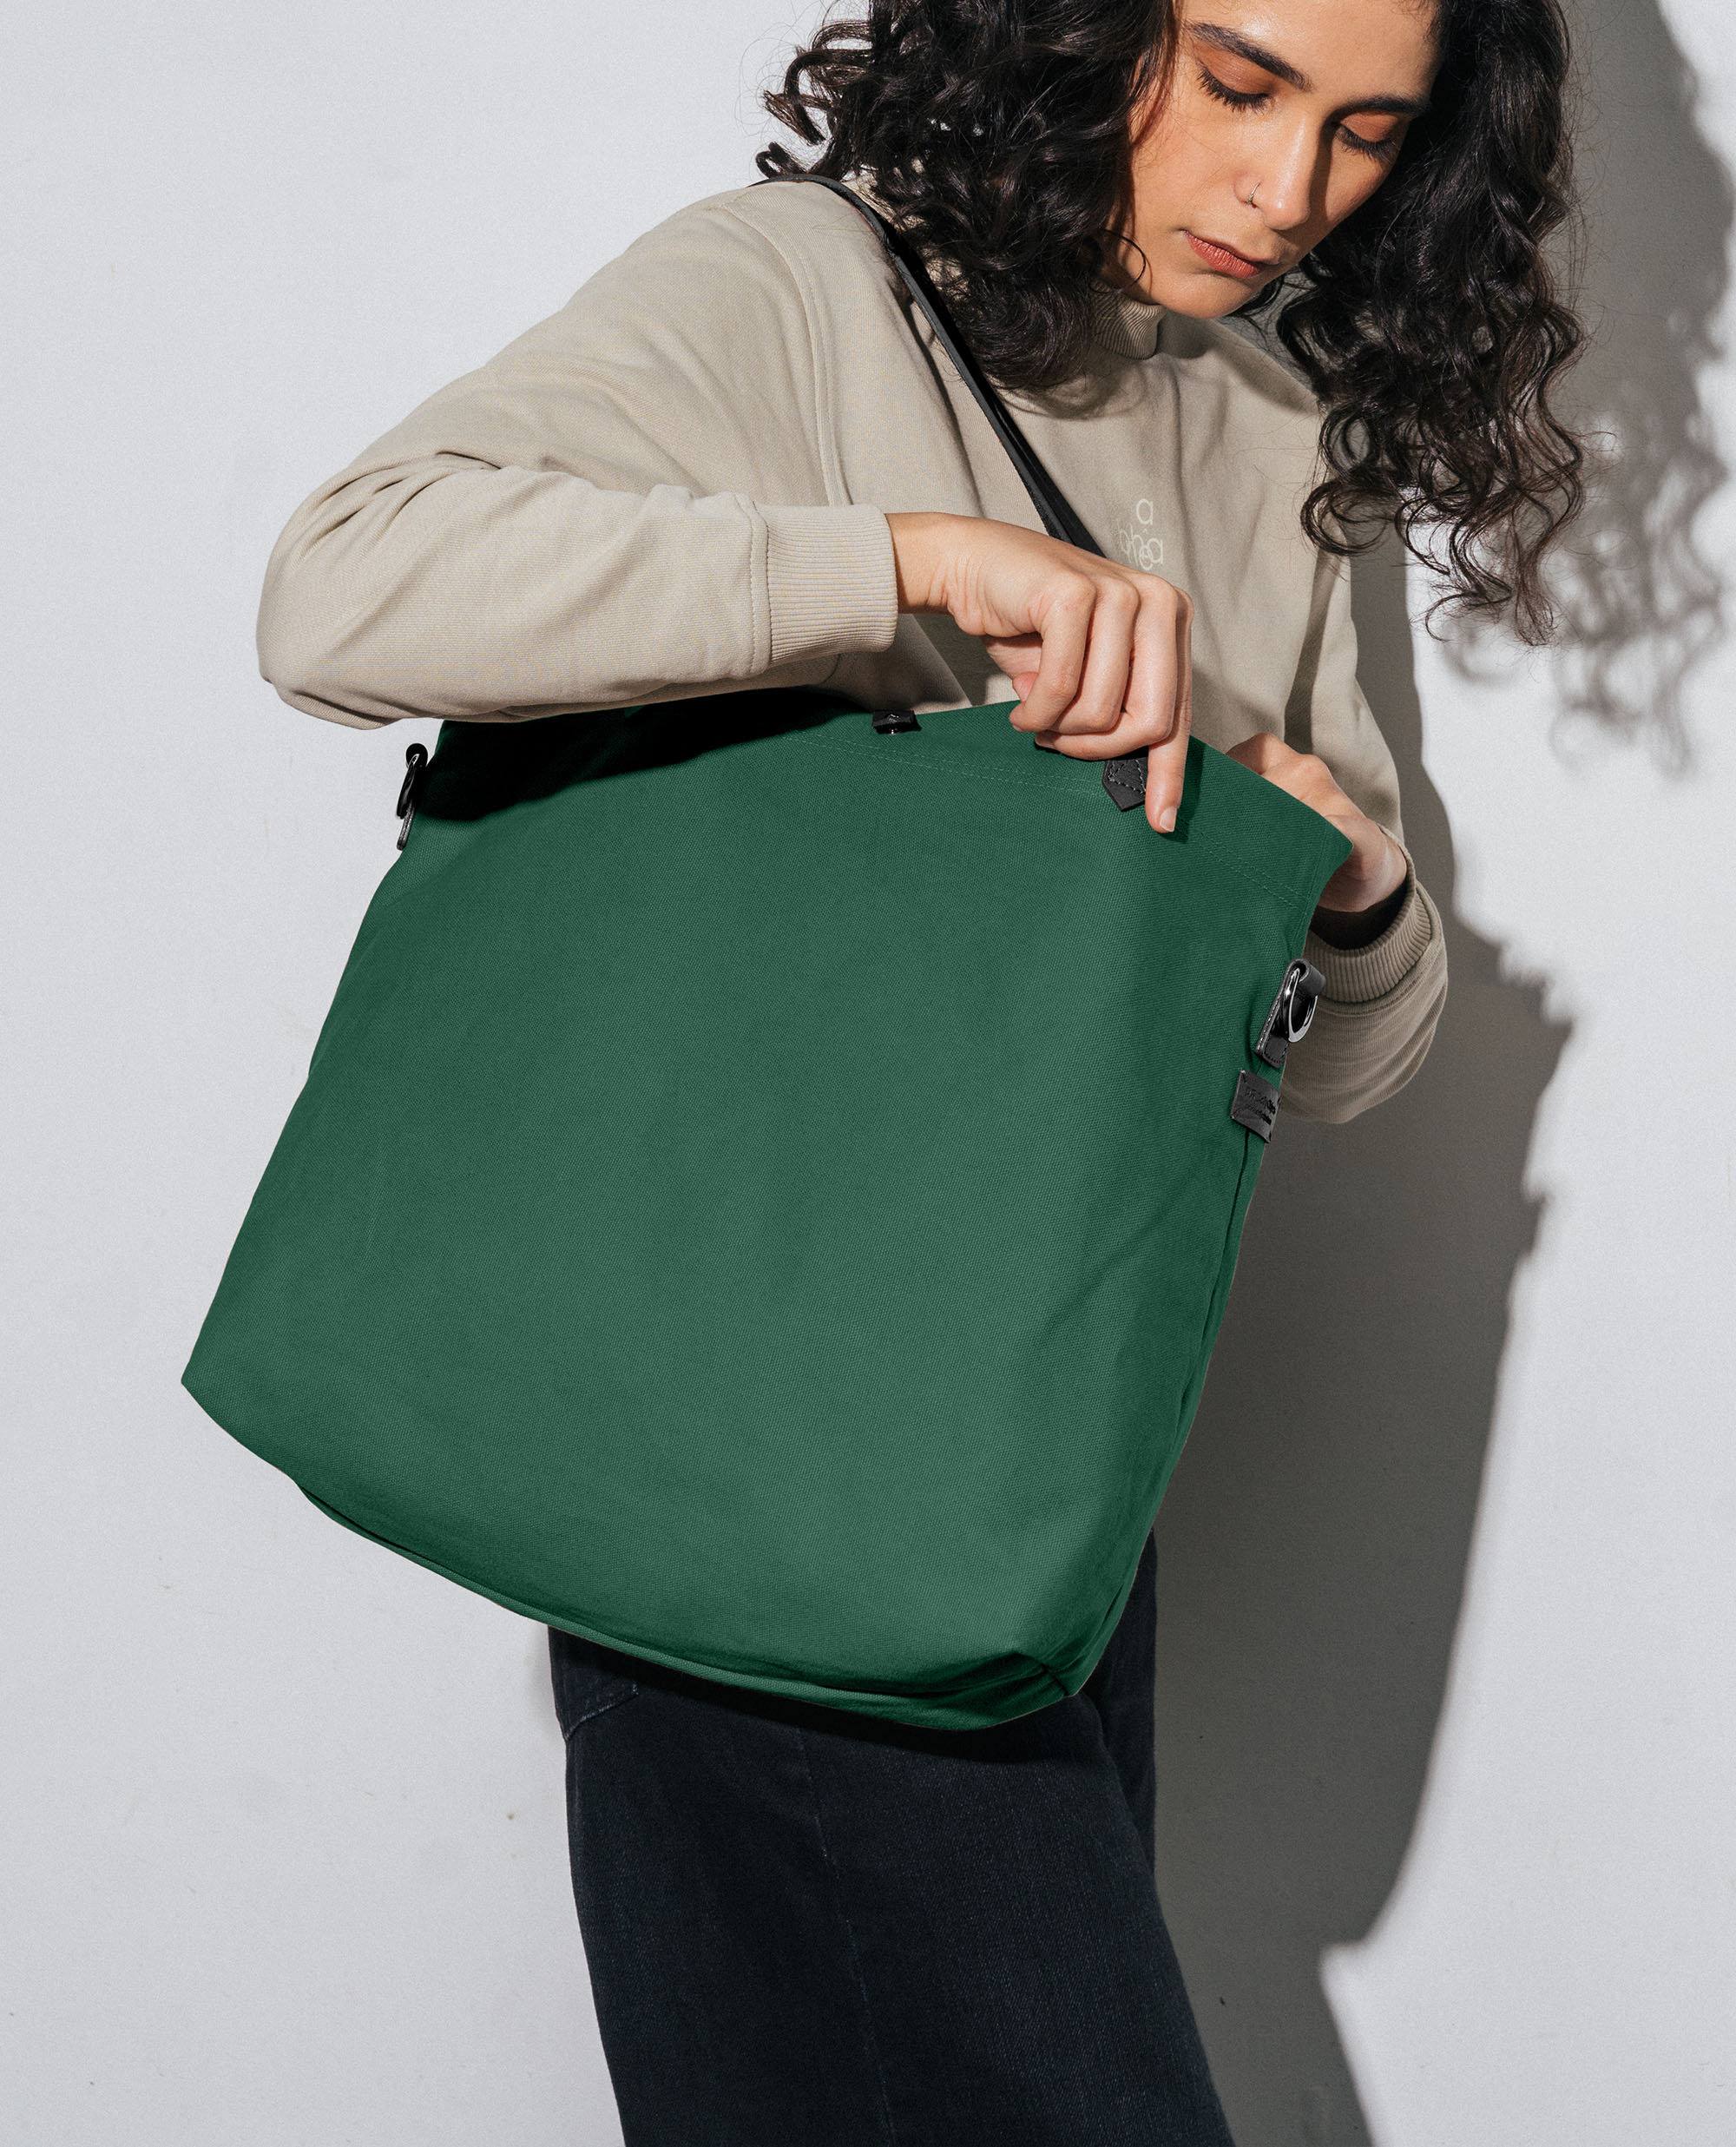 Buy Women Tote Bag Online | SKU: 66-23-21-10-Metro Shoes